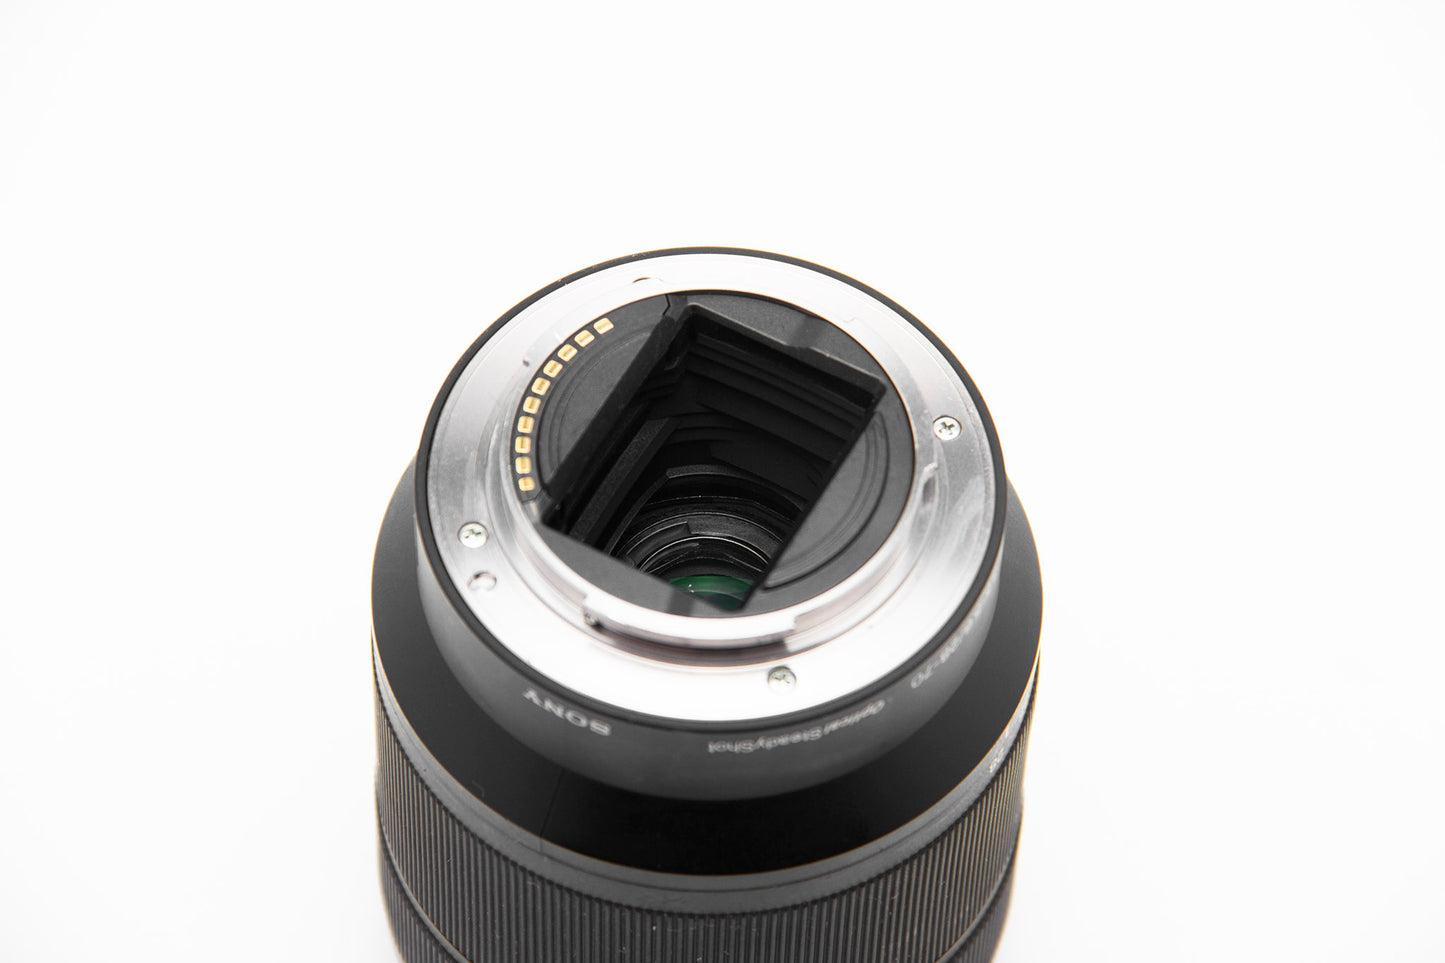 Used Sony E Mount 28-70mm Lens